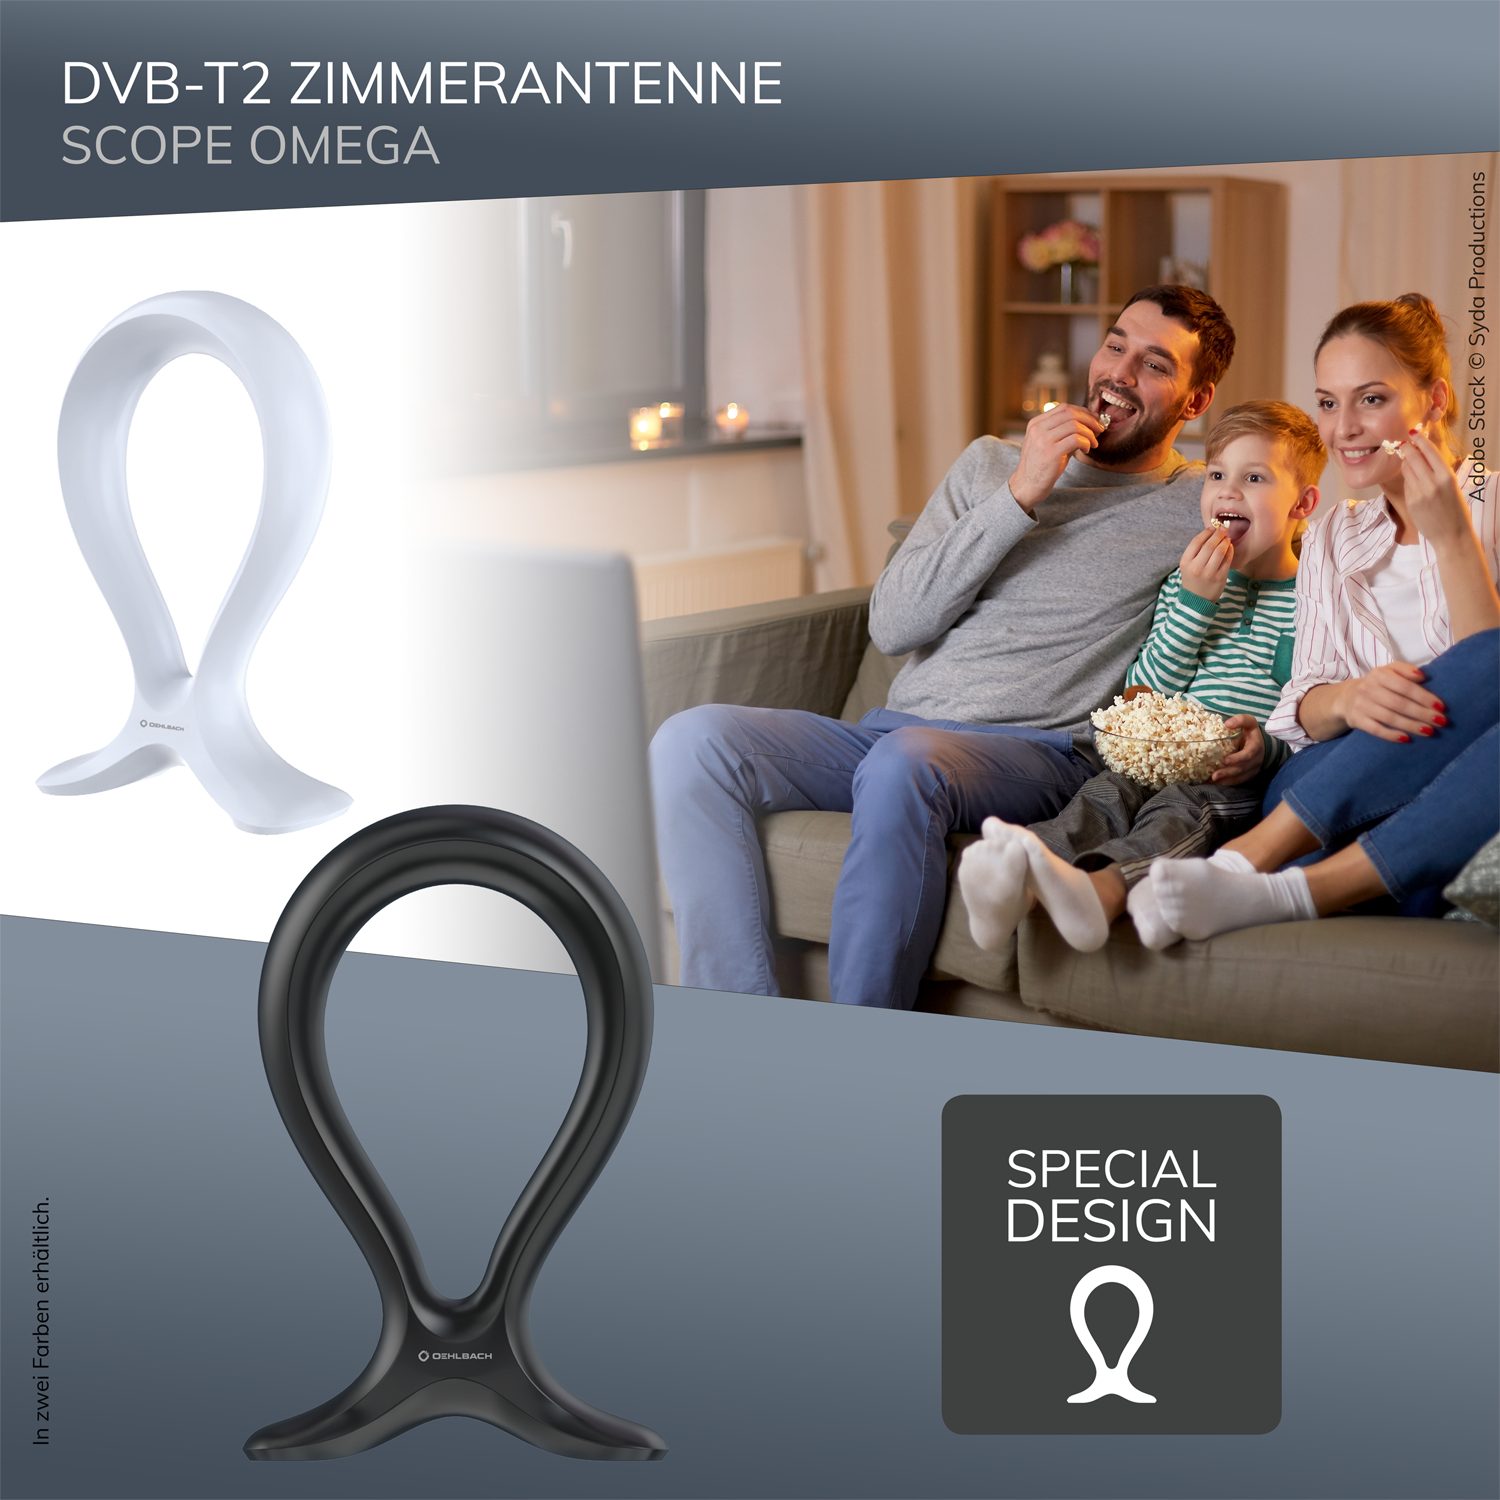 für Scope Innenantenne (DVB-T2) Oehlbach Zimmerantenne DVB-T2 Omega Weiß